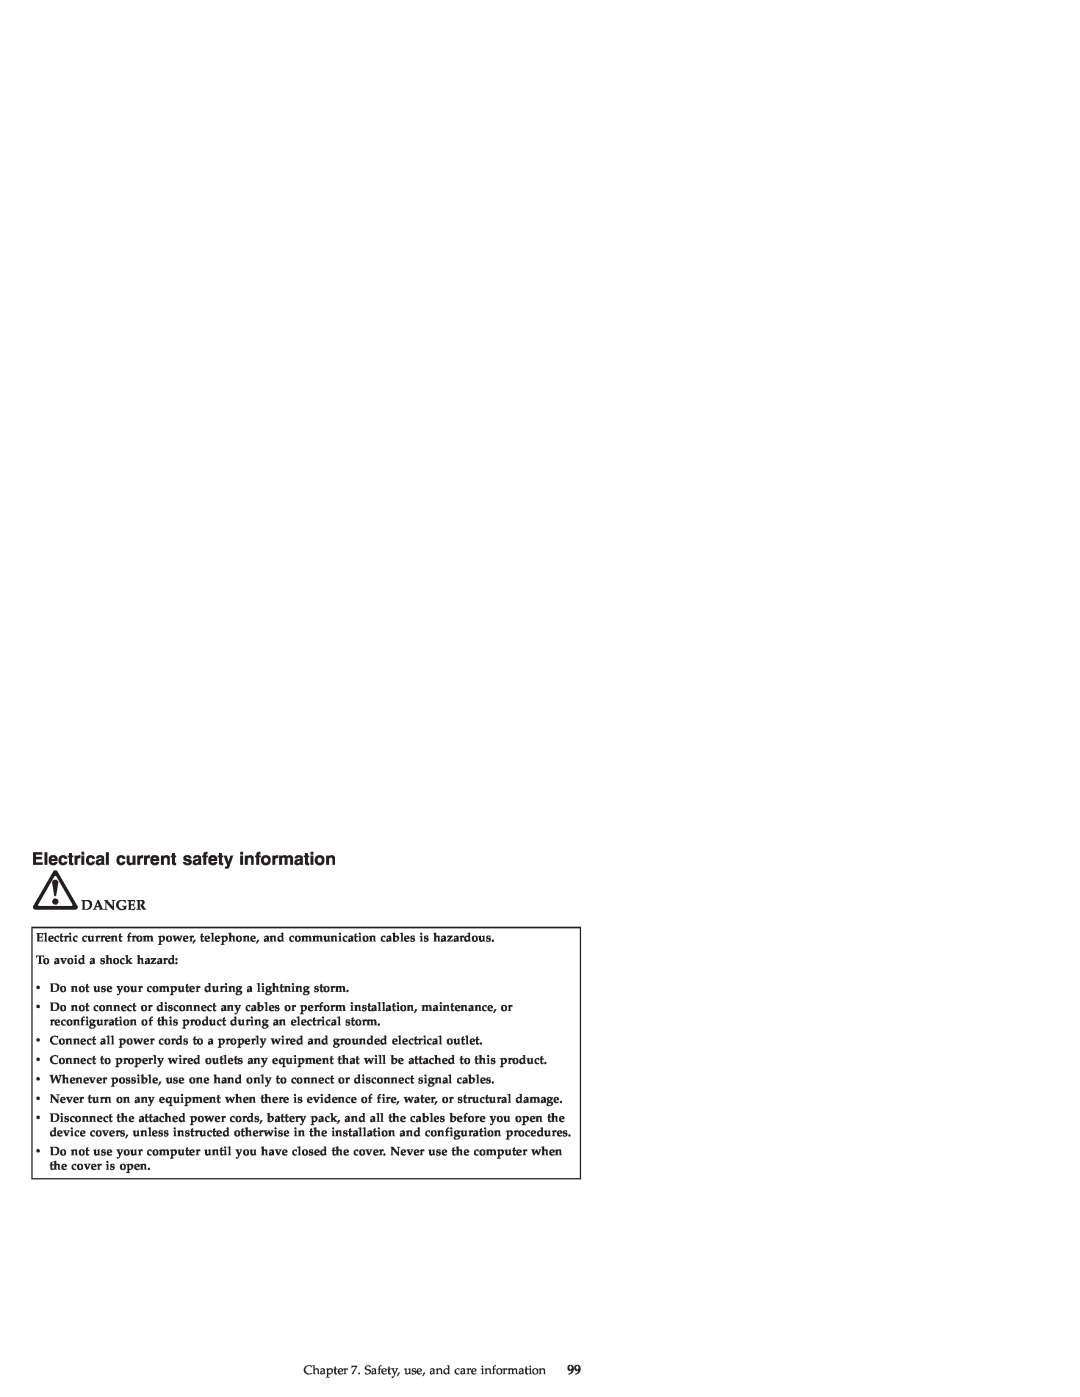 Lenovo S9E, S10E manual Electrical current safety information, Danger 